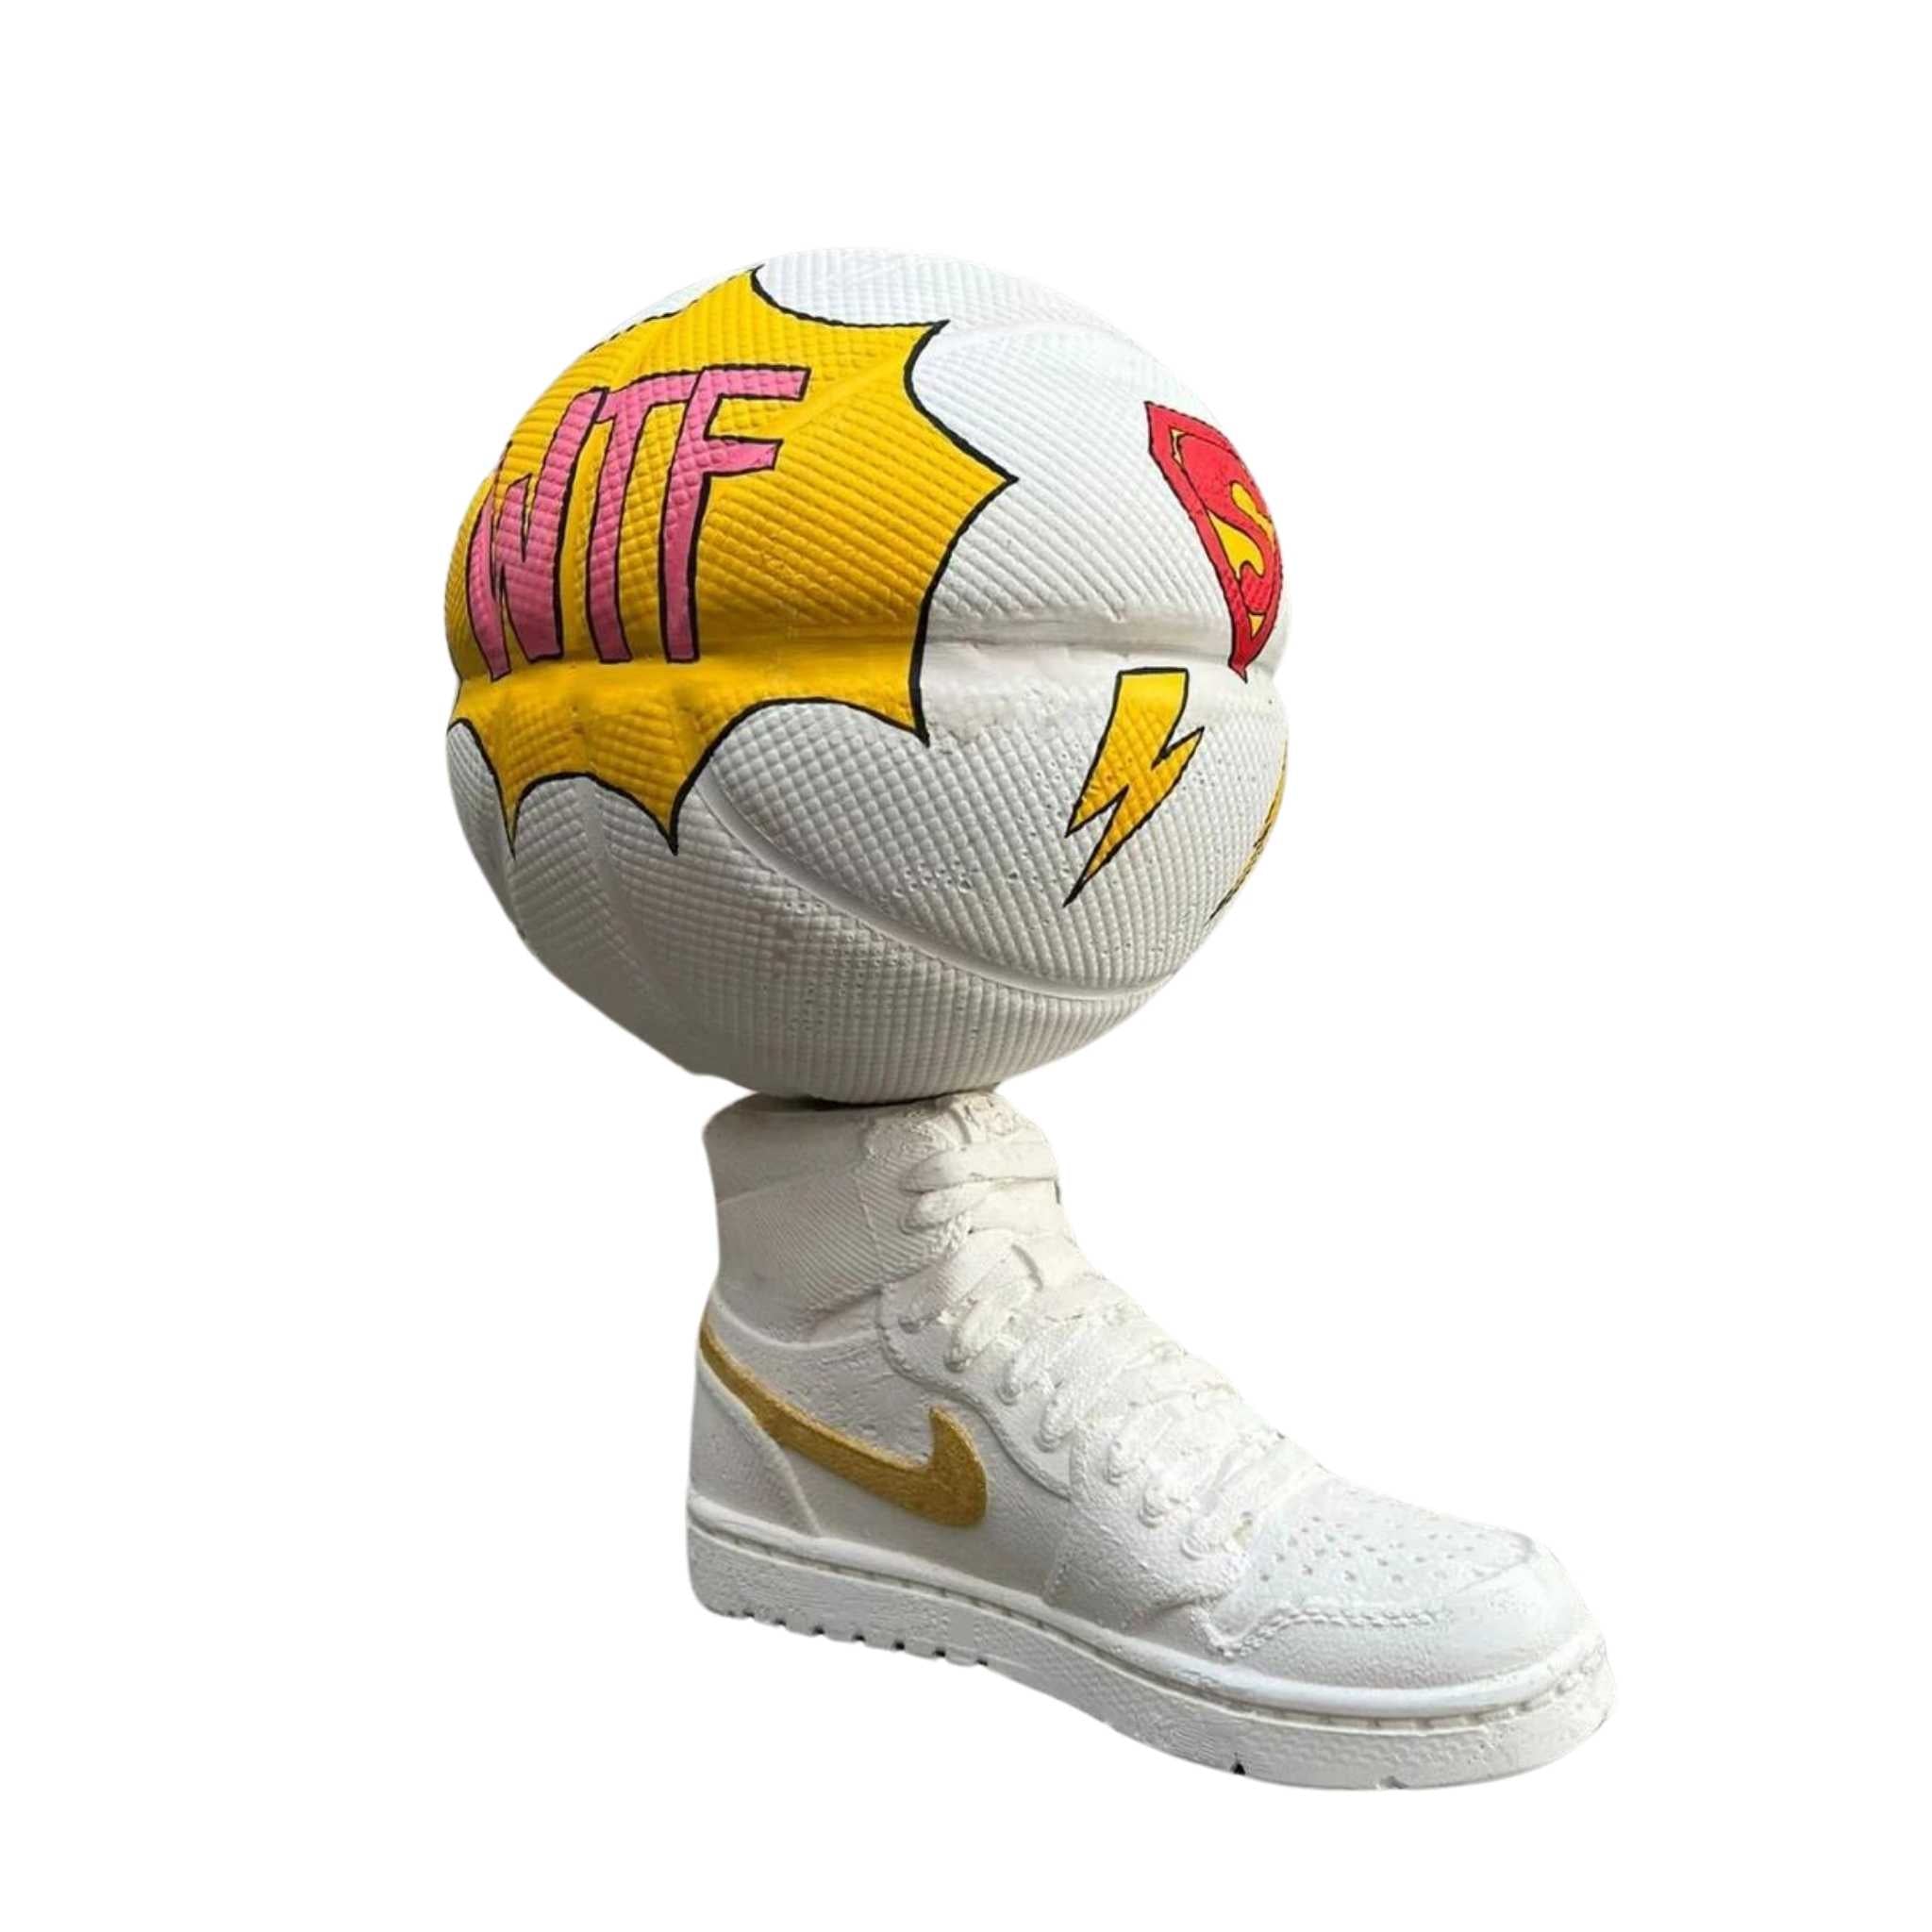 Sneaker Slam: Jordan & Basketball Pop Art Sculpture